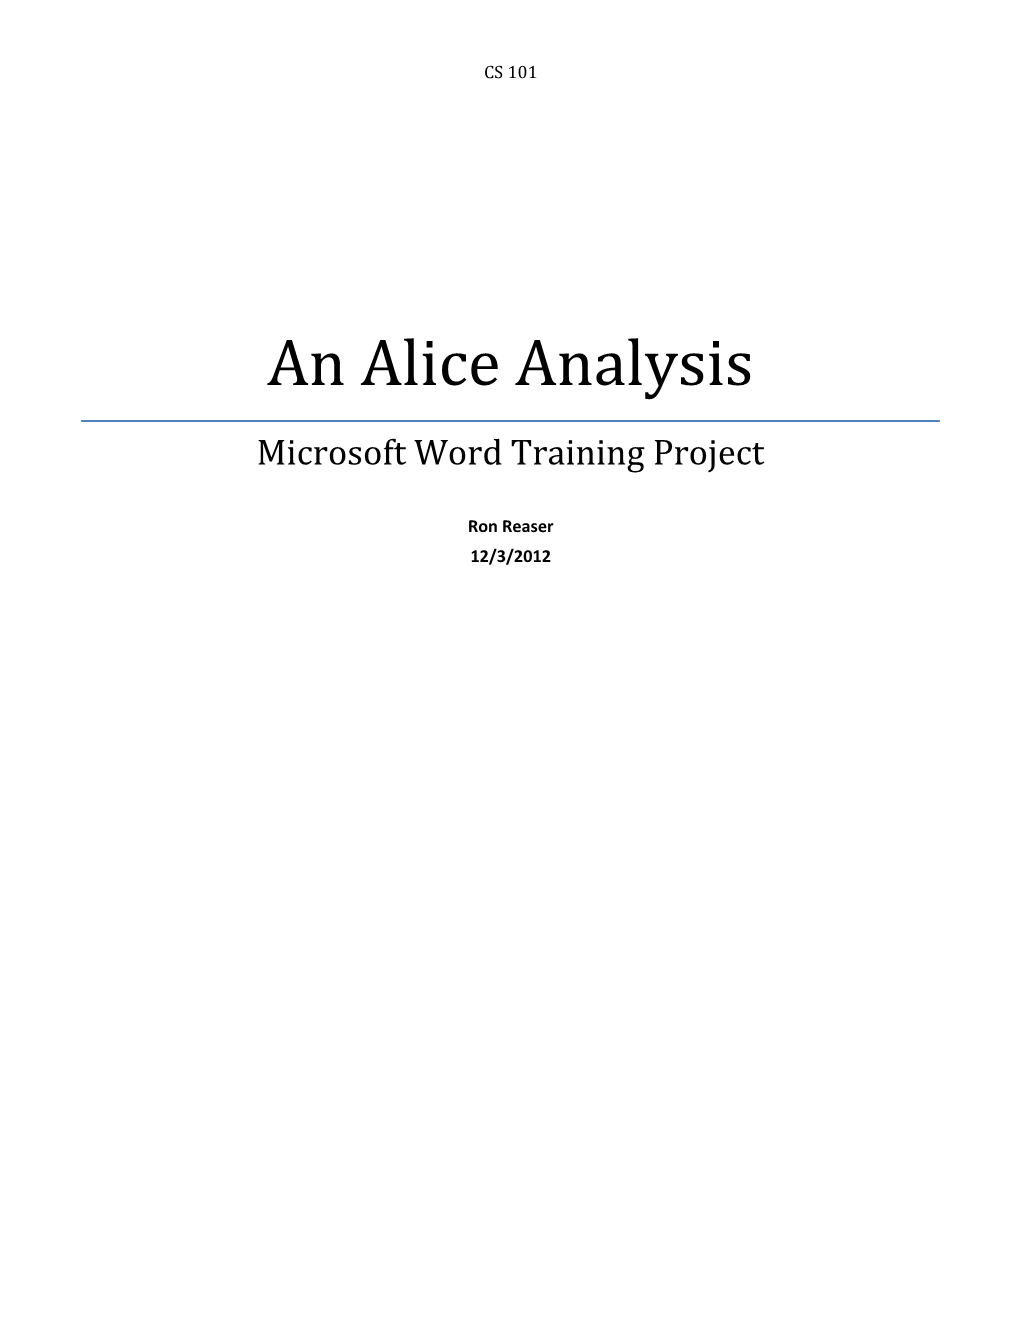 An Alice Analysis